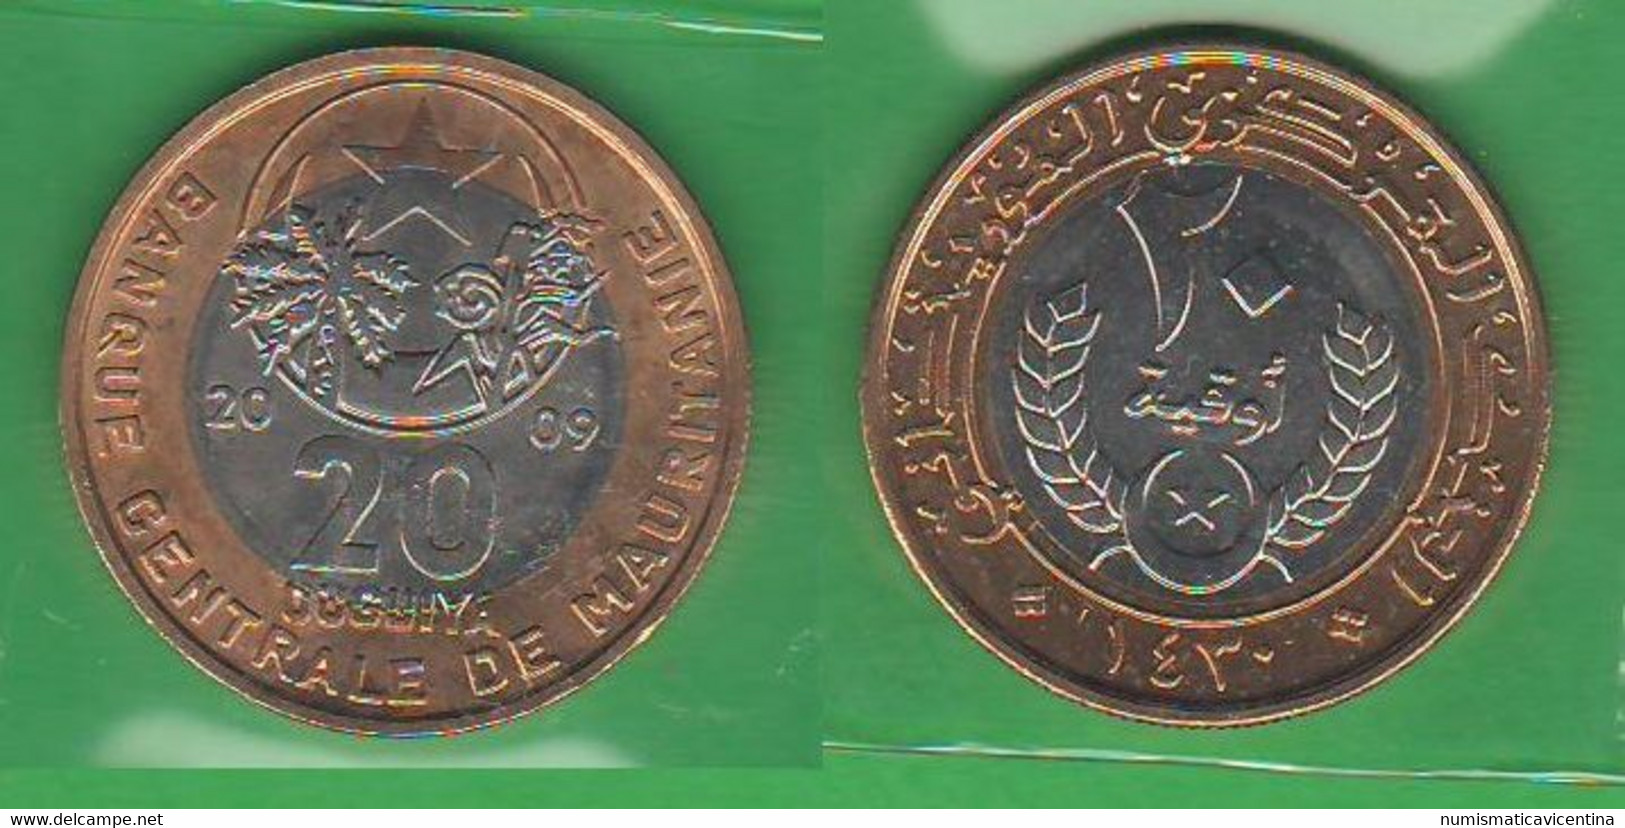 Mauritania 20 Ouguiya 2009 Mauritanie Bimetallic Coin - Mauritania